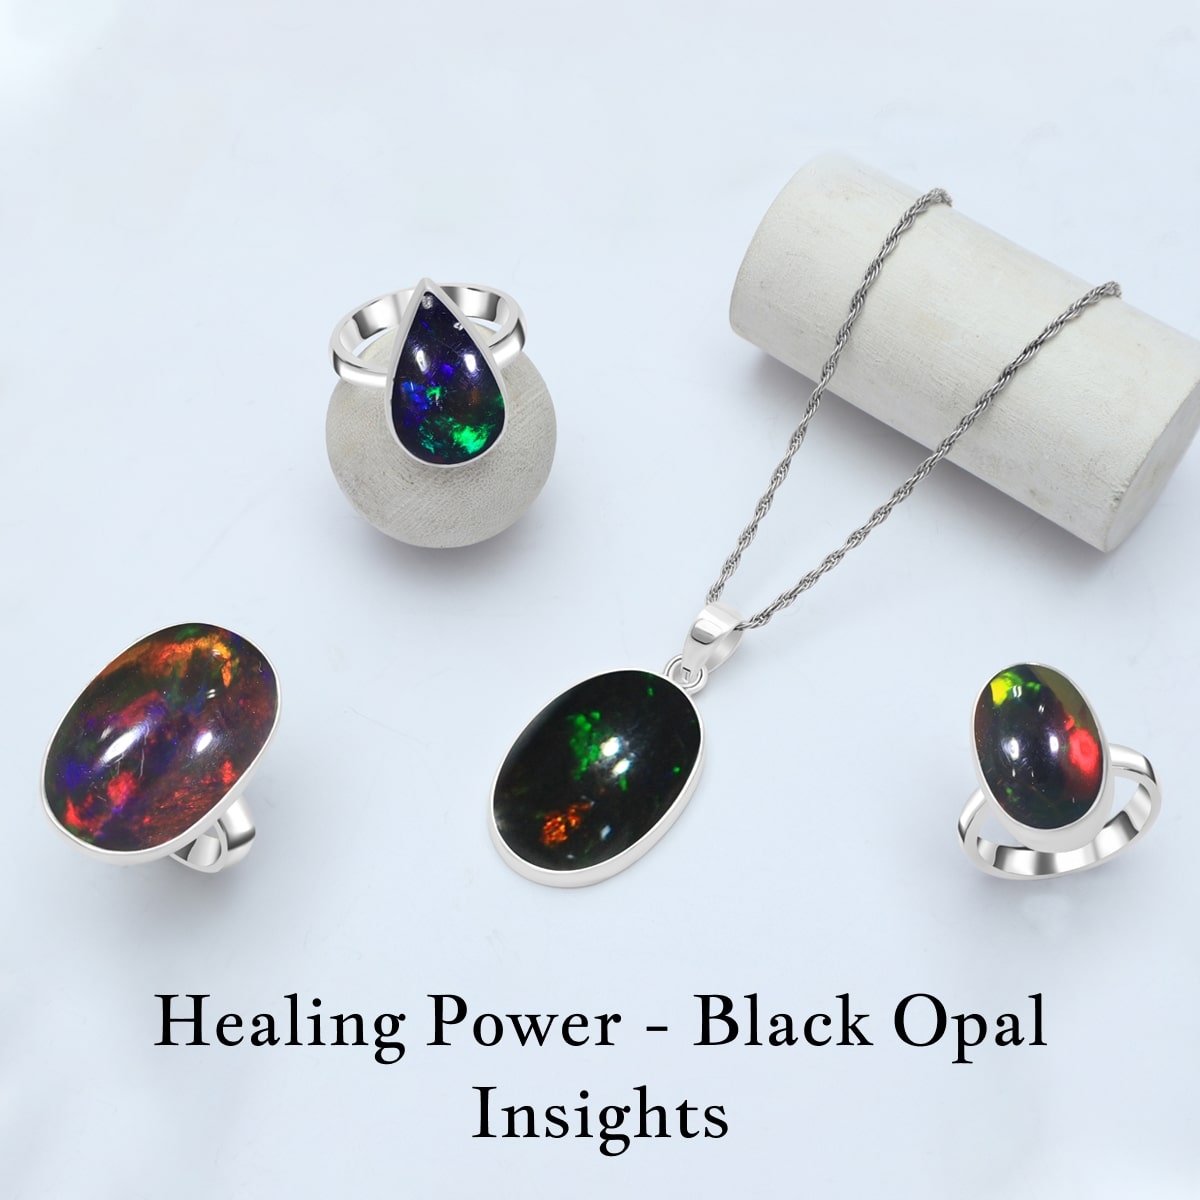 Black Opal Healing Properties